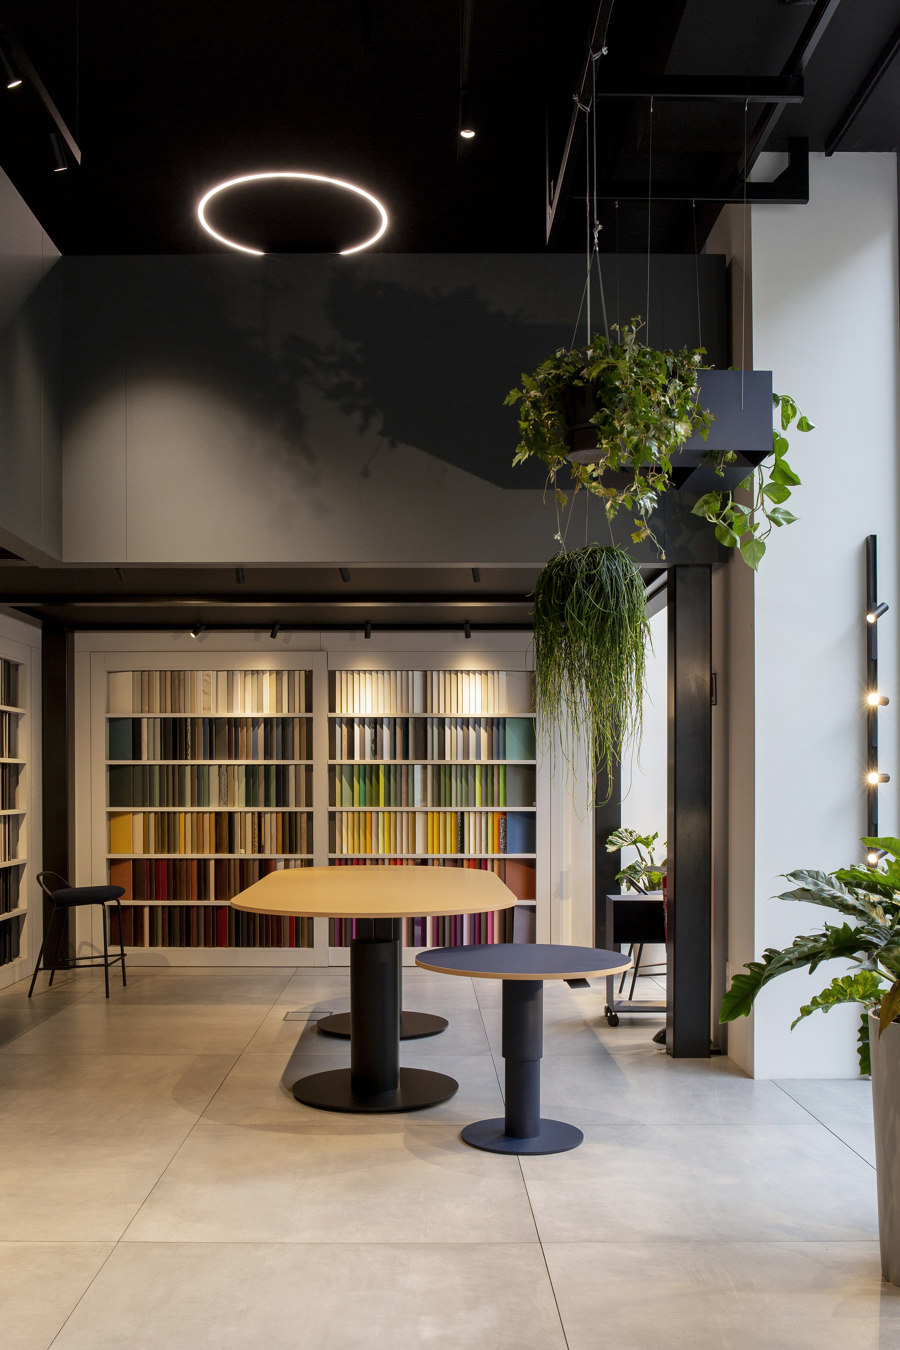 Mara’s Milan manifesto: designing furniture that makes us feel | Nouveautés